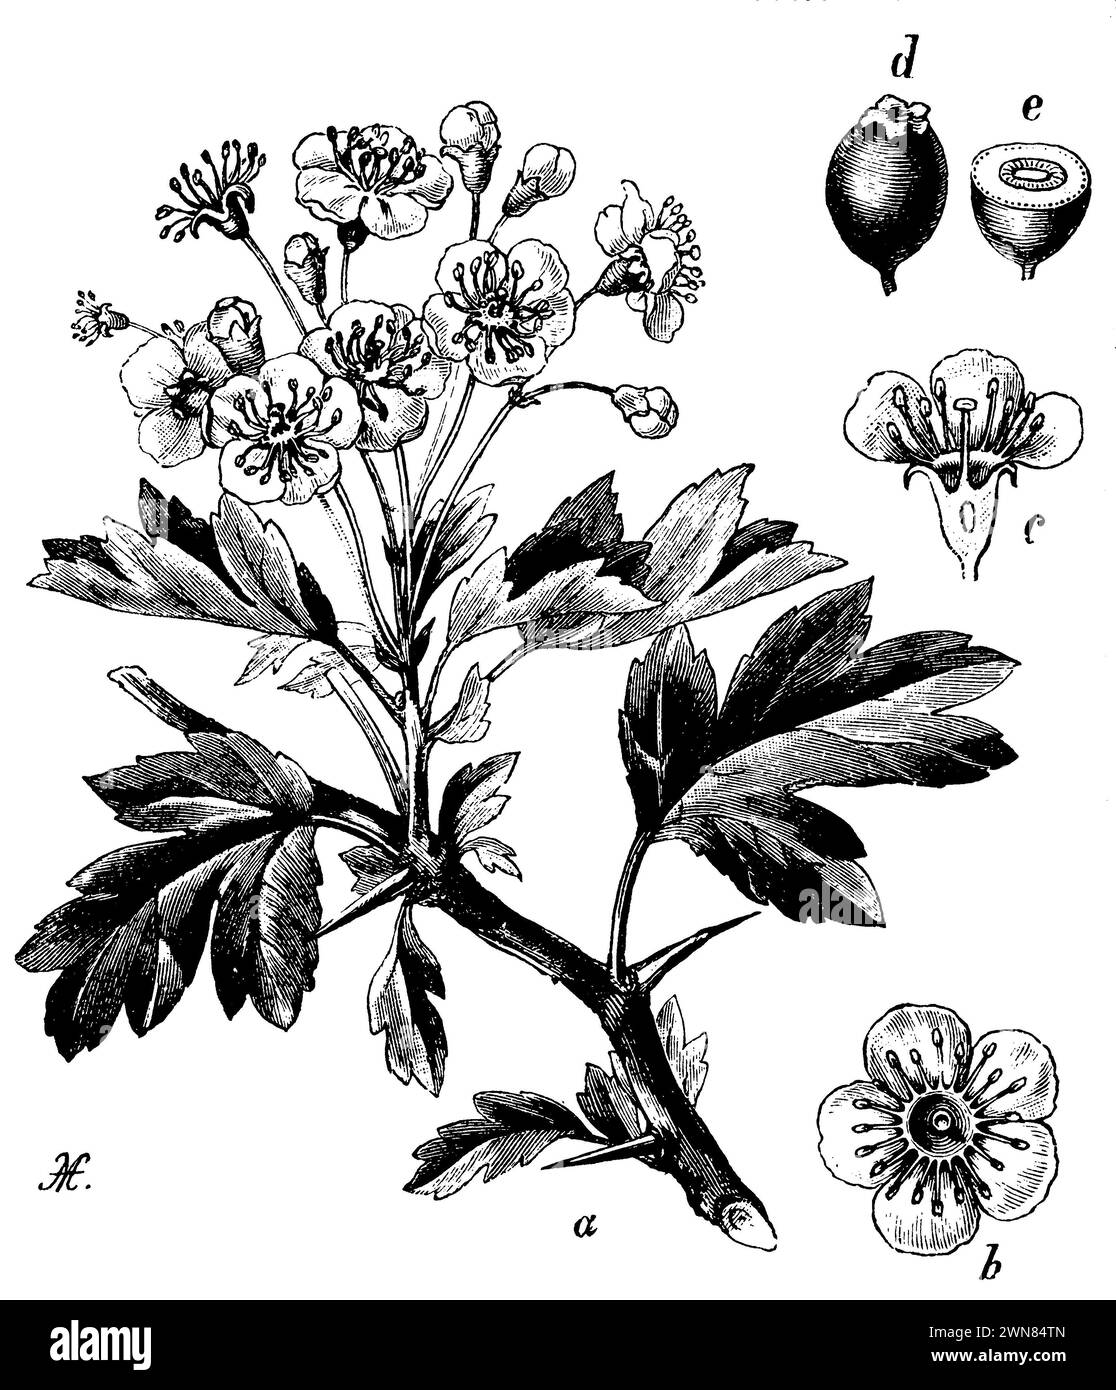 Weißdorn, ein Blumenzweig, b Blüte von oben, c Blüte im Durchschnitt, d Frucht (Mehlfass), e Schnittfrucht, Crataegus laevigata, A M (Botanik, 1898), Zweigriffeliger Weißdorn, a Blütenzweig, b Blüte von oben, c Blüte im Durchschnitt, d Frucht (Mehlfässchen), e durchschnittene Frucht, aubépine à deux Stile, A rameau floral, b fleur vue de dessus, c fleur en moyenne, d Fruit (farinier), e Fruit Coupé en deux Stockfoto